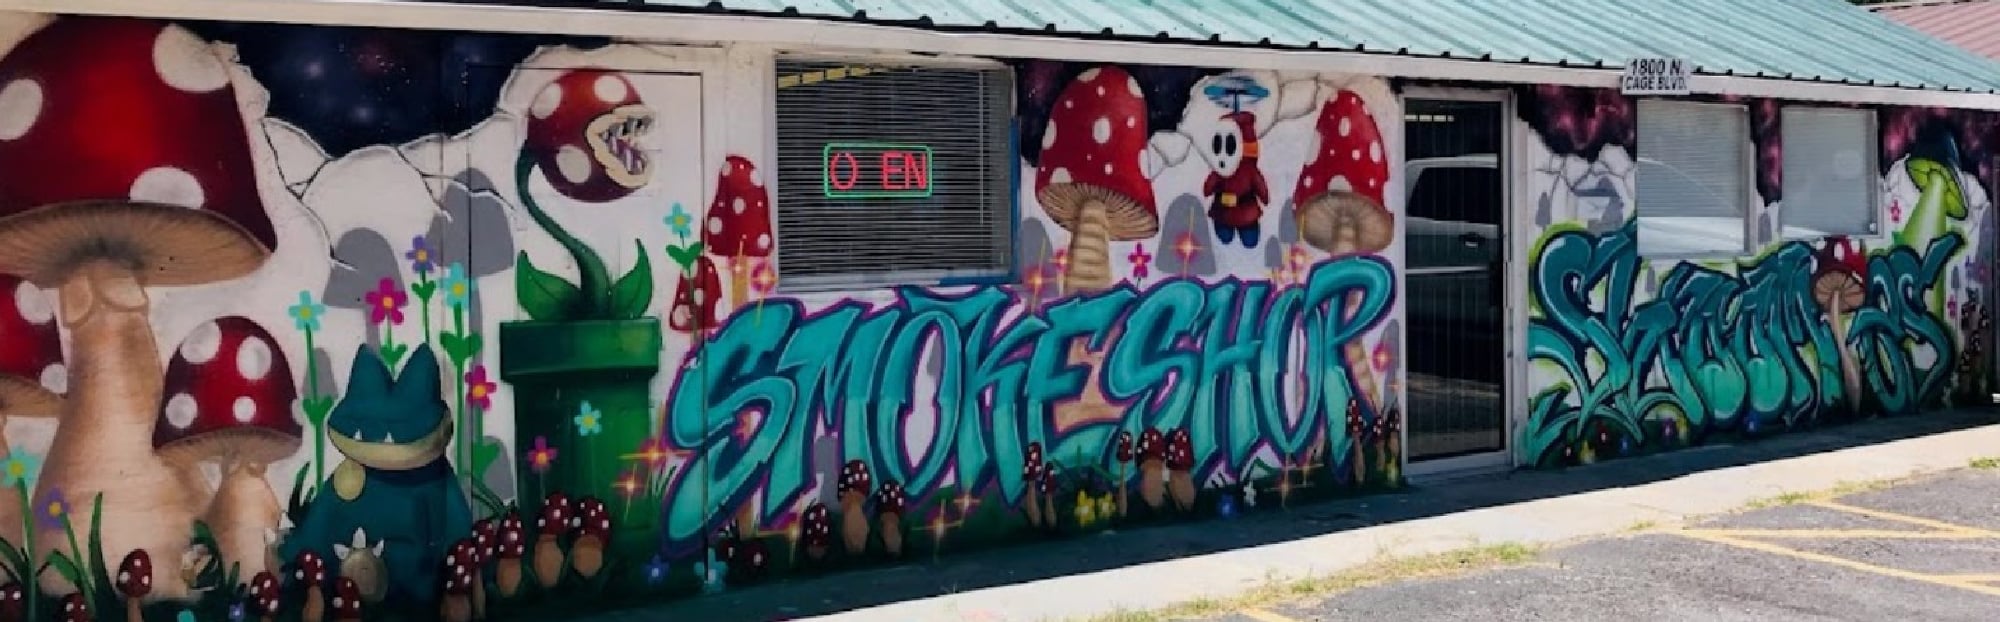 image of shroomies smoke shop in pharr tx